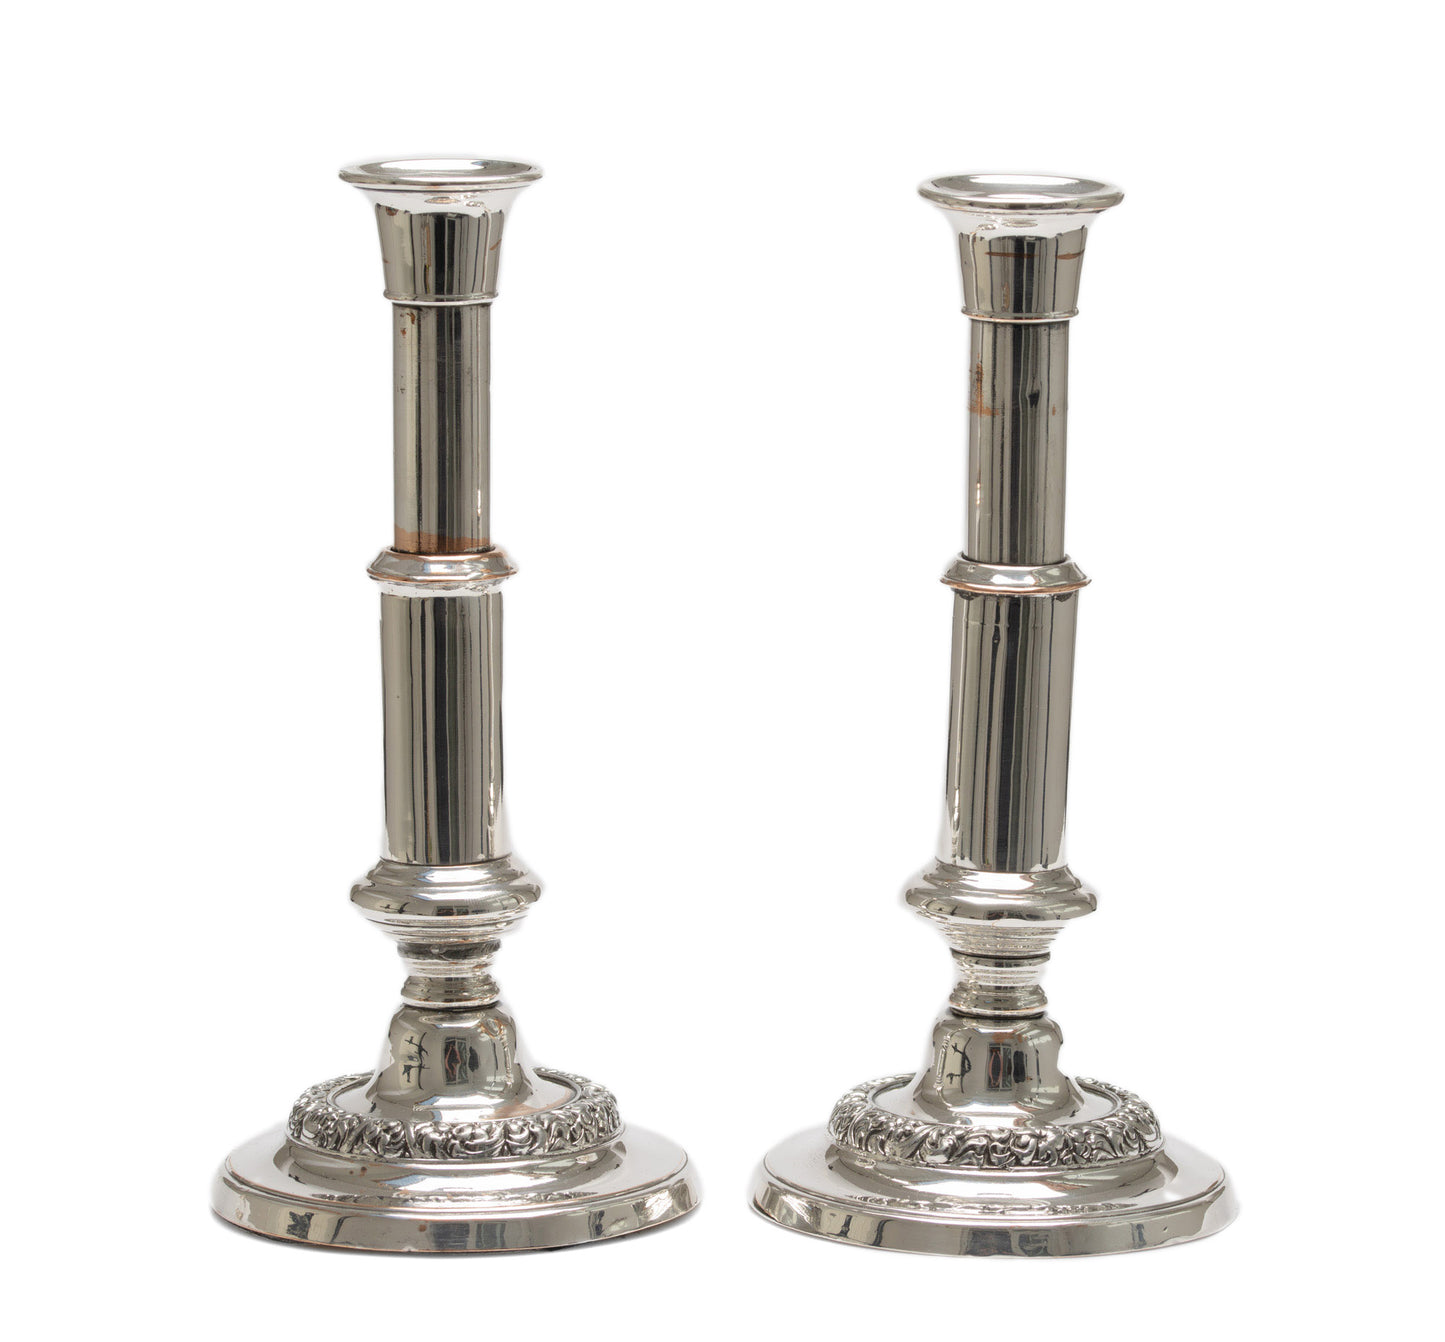 Pair Antique Silver Plated over Copper Telescopic Candlesticks - Victorian Era (Code 2563)